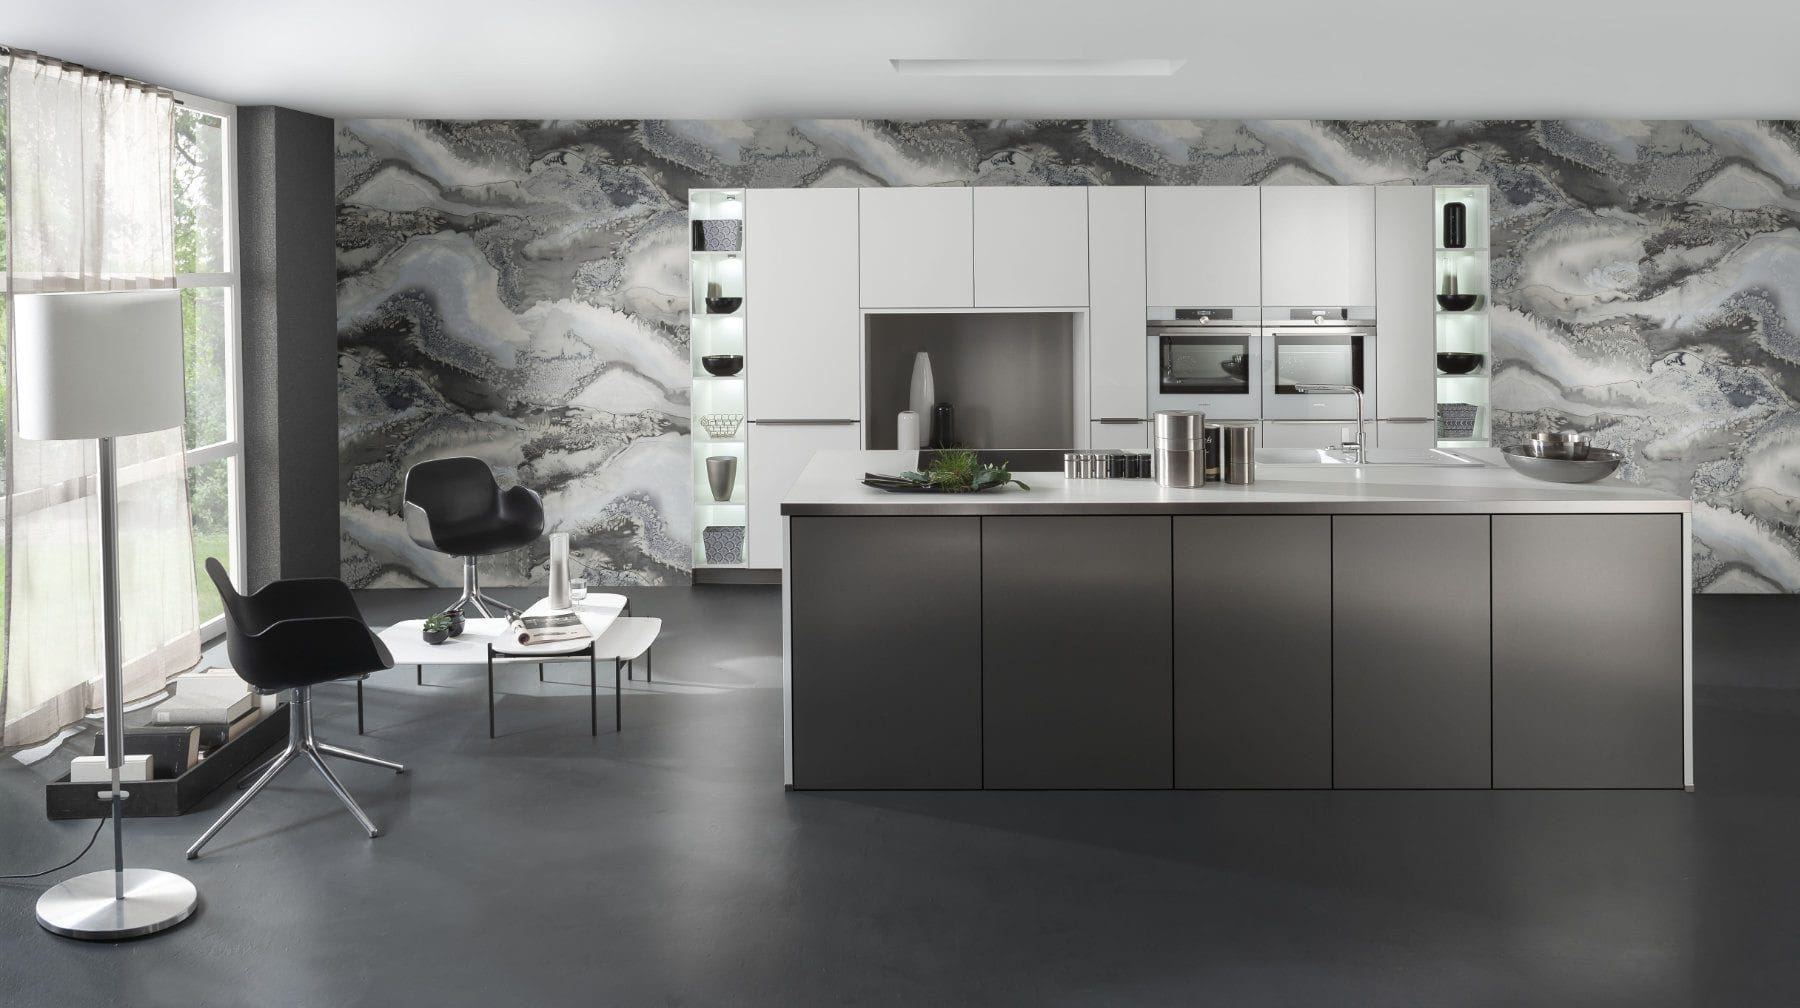 Bauformat Matt White Metallic Effect Kitchen With Island 2 | Rowe Fitted Interiors